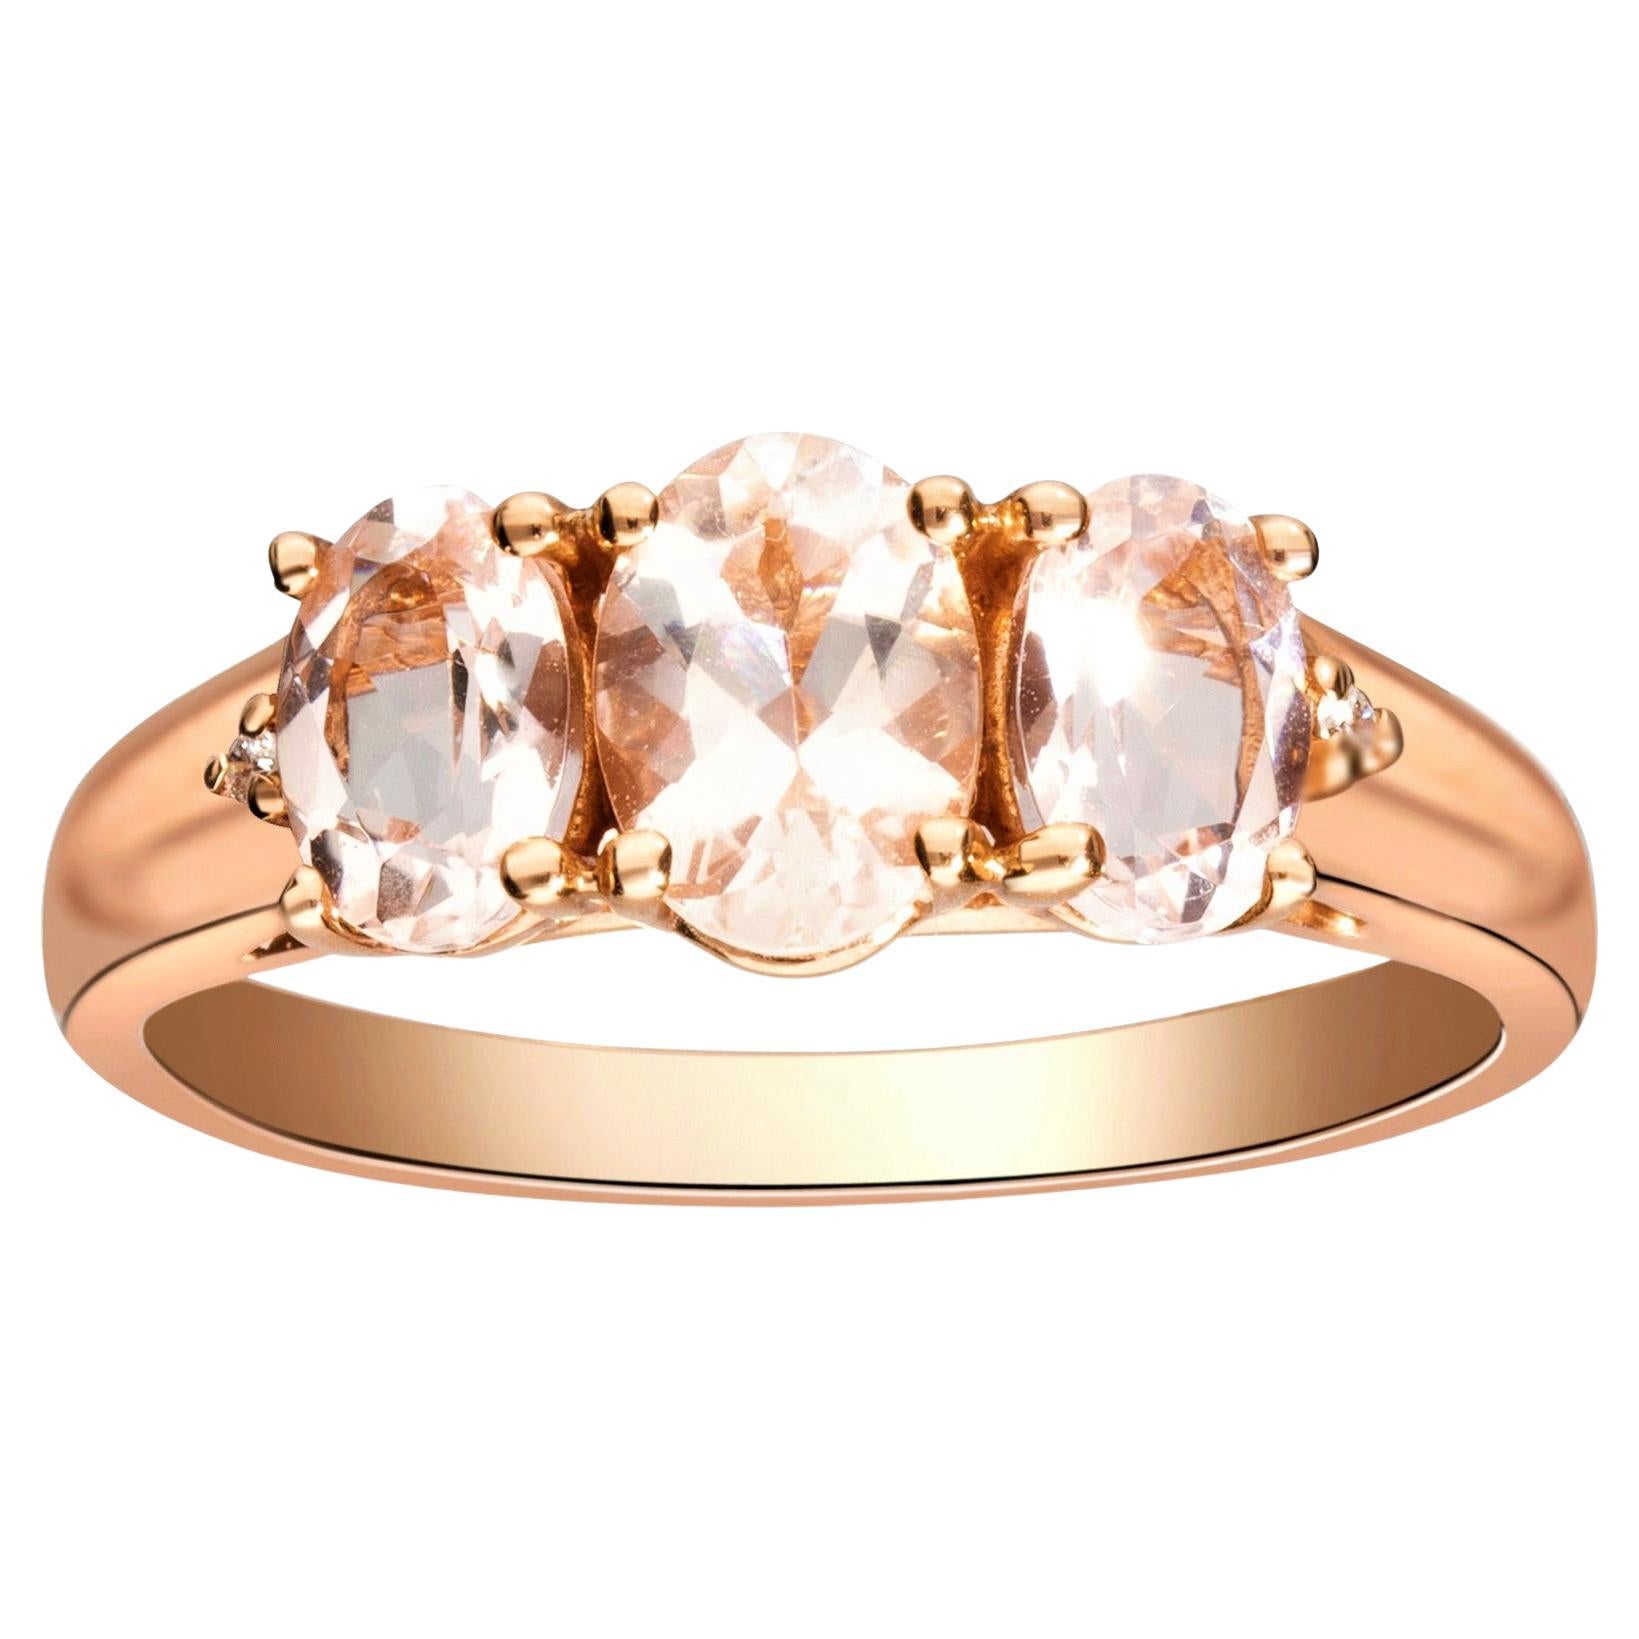 1.44 Carat Oval Cut Morganite and Diamond 10K Rose Gold Wedding Ring